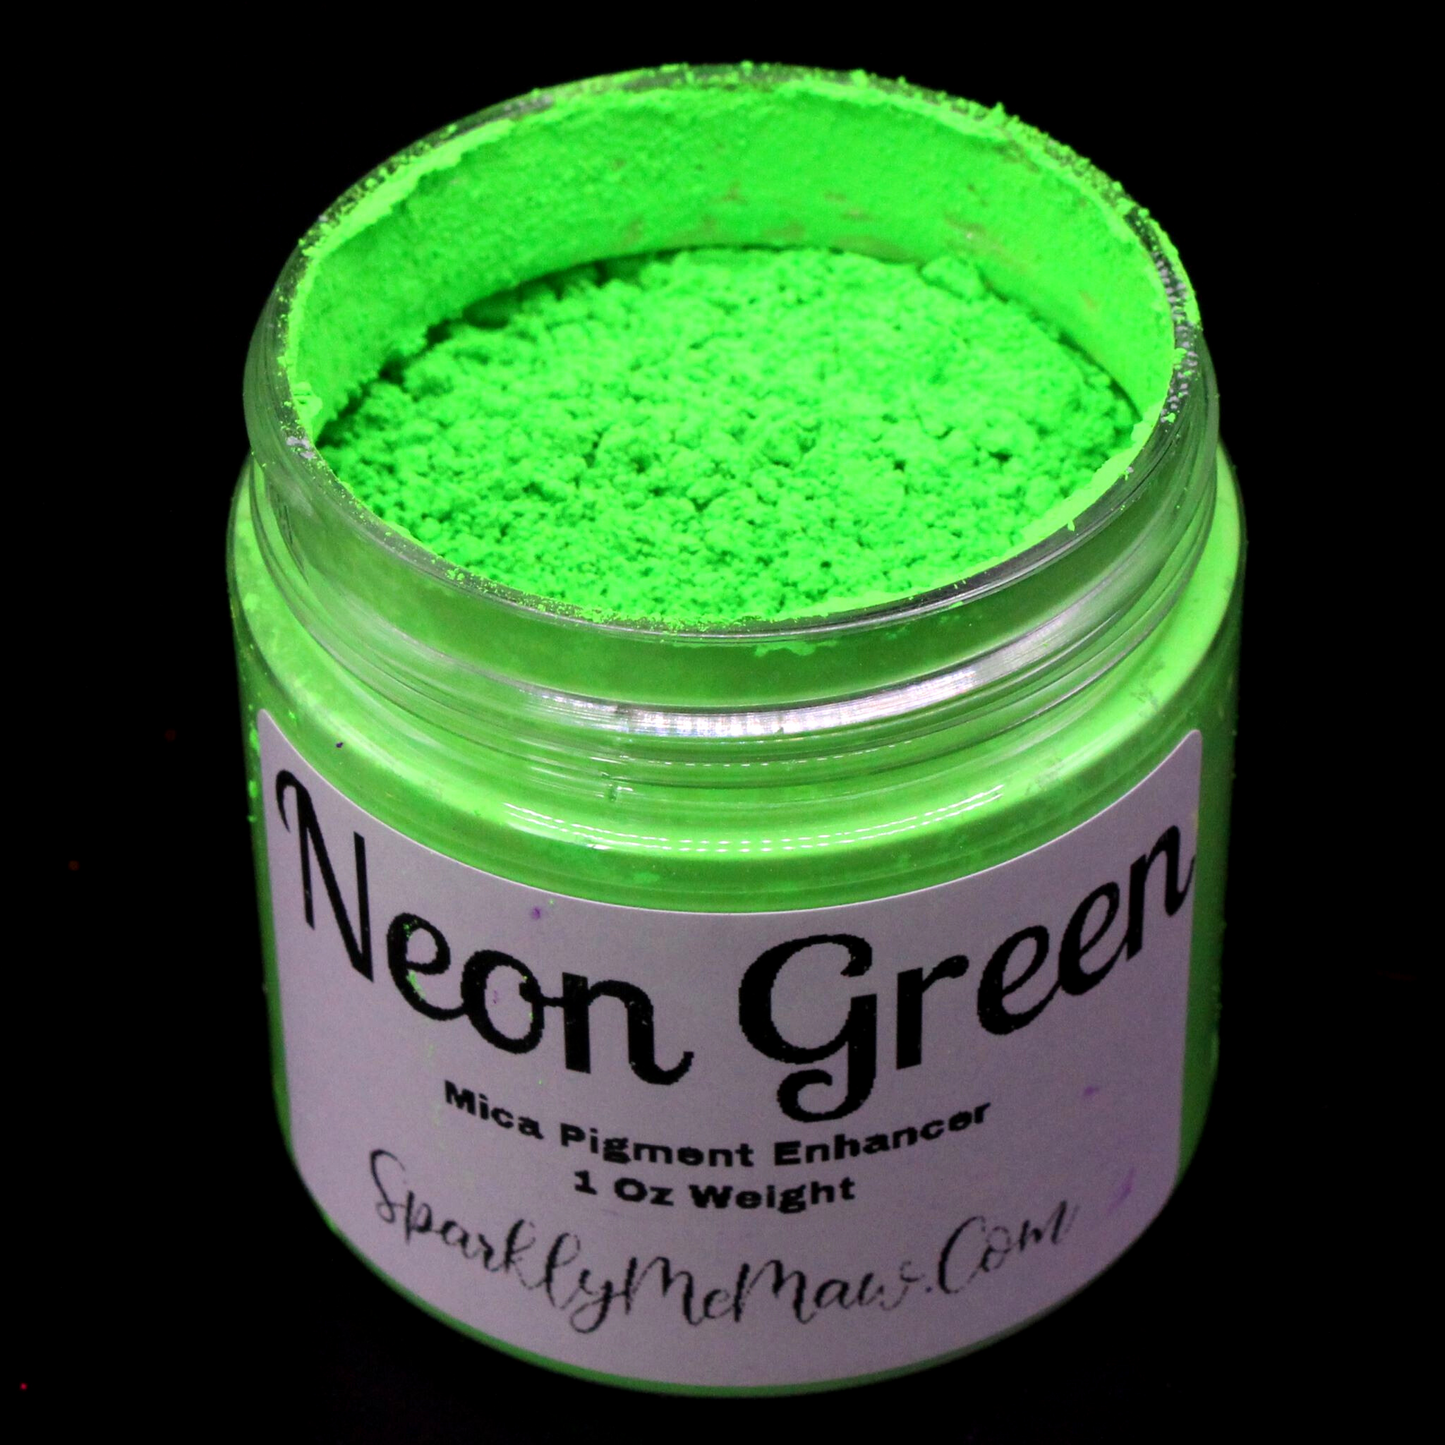 Neon Green Mica Pigment Enhancer 1 oz Jar!!